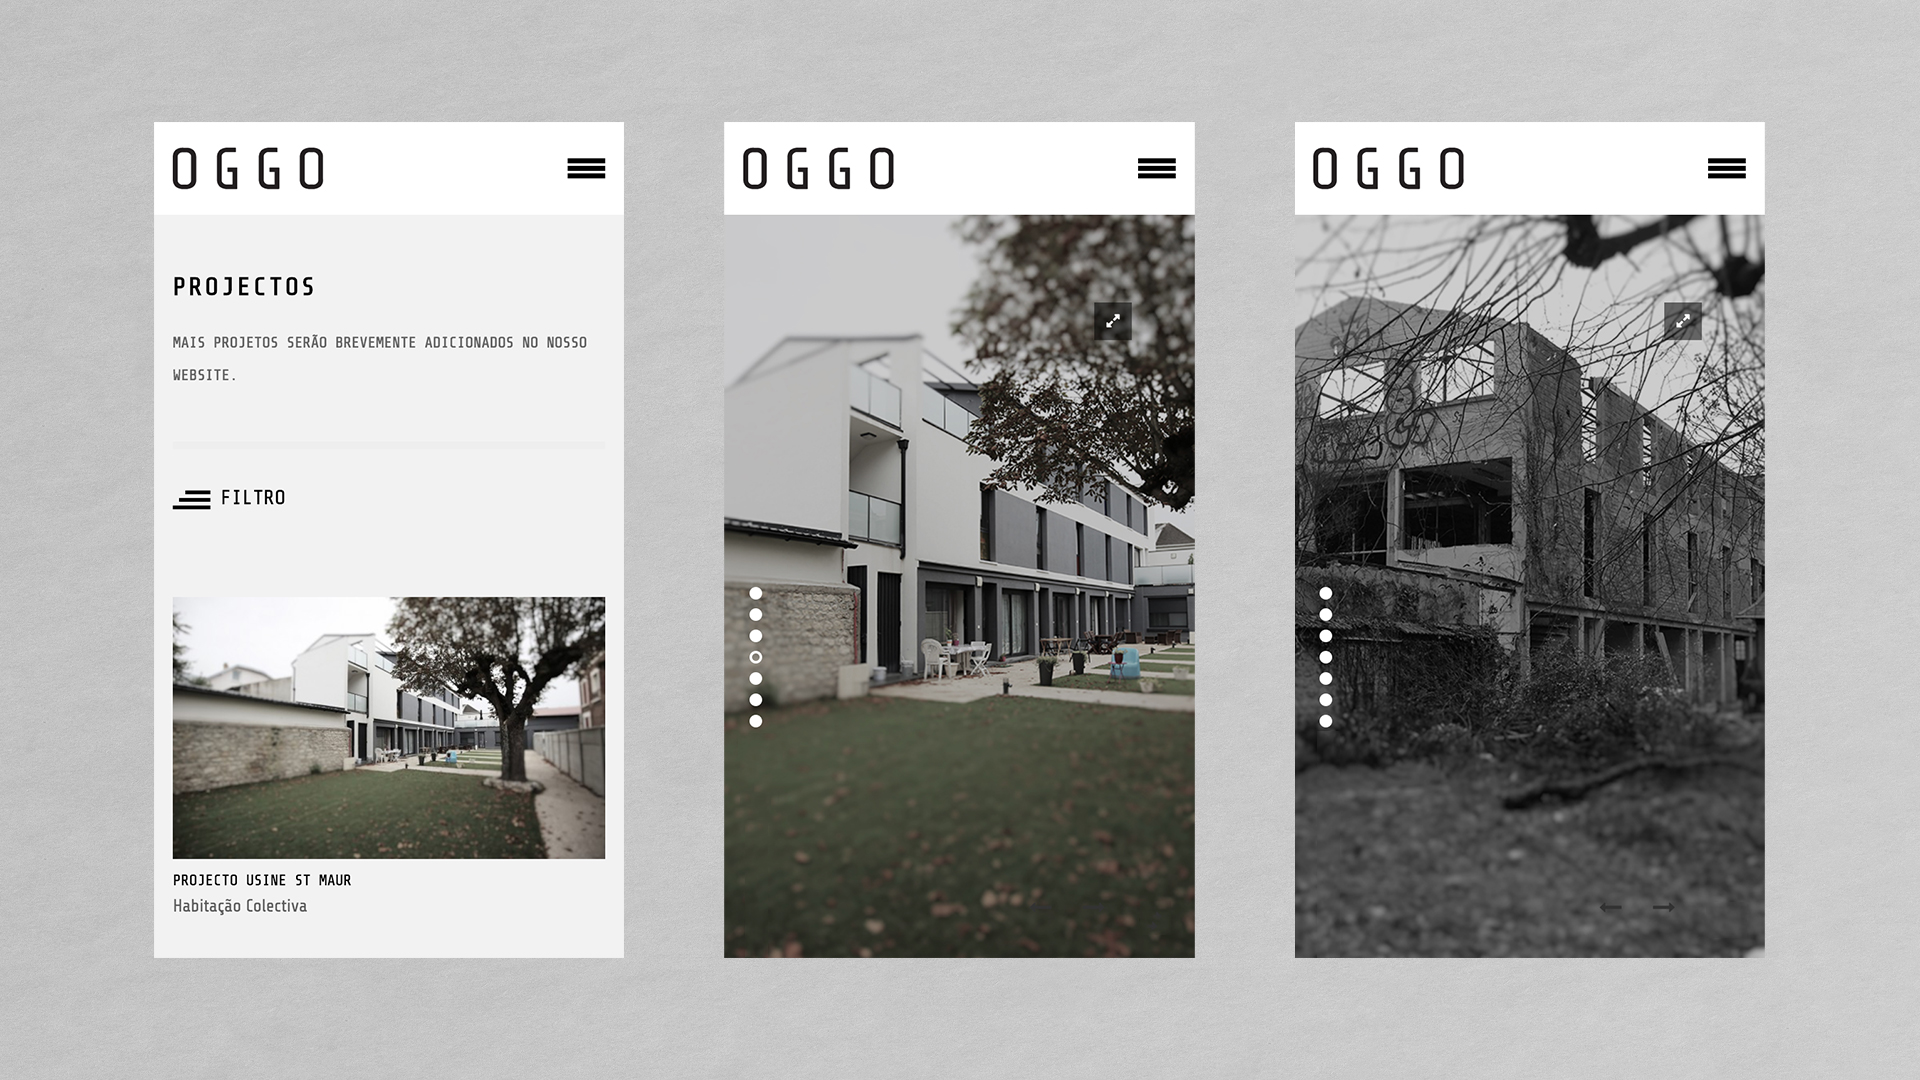 OGGO Architects Studio